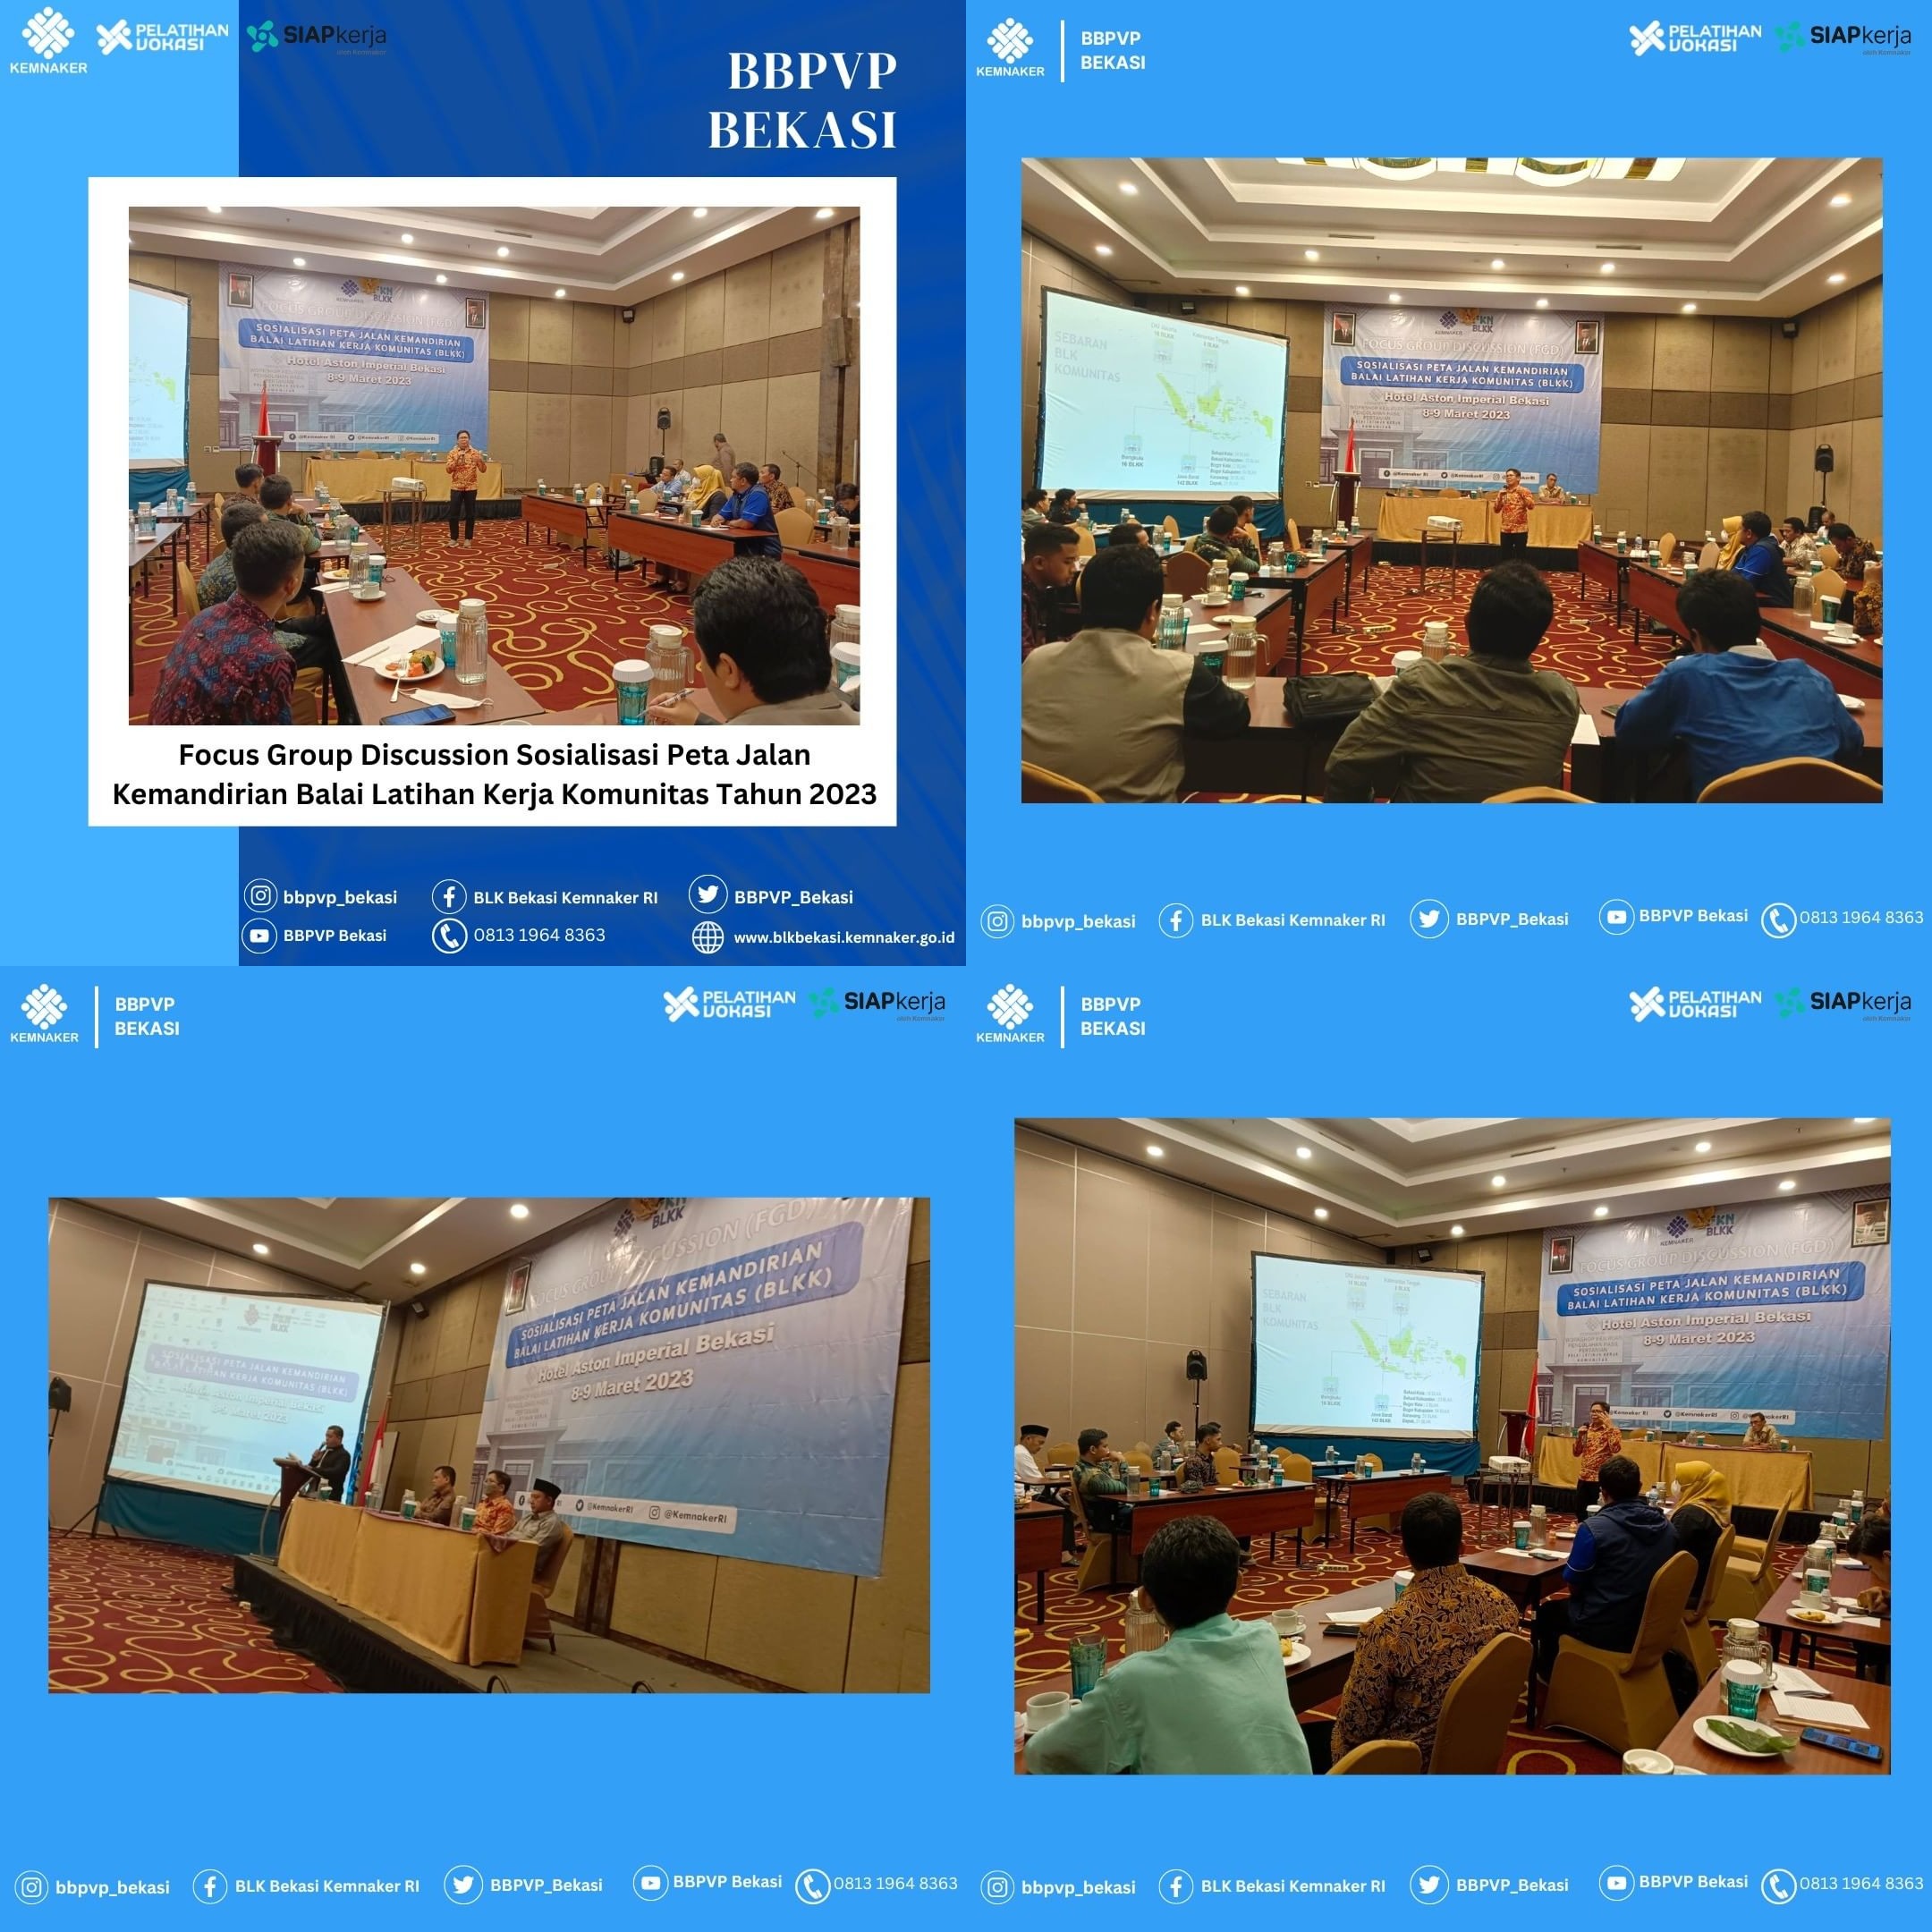 Focus Group Discussion (FGD) Sosialisasi Peta Jalan Kemandirian Balai Latihan Kerja Komunitas (BLKK) Tahun 2023 di Hotel ASTON Imperial Bekasi Hotel & Conference Center